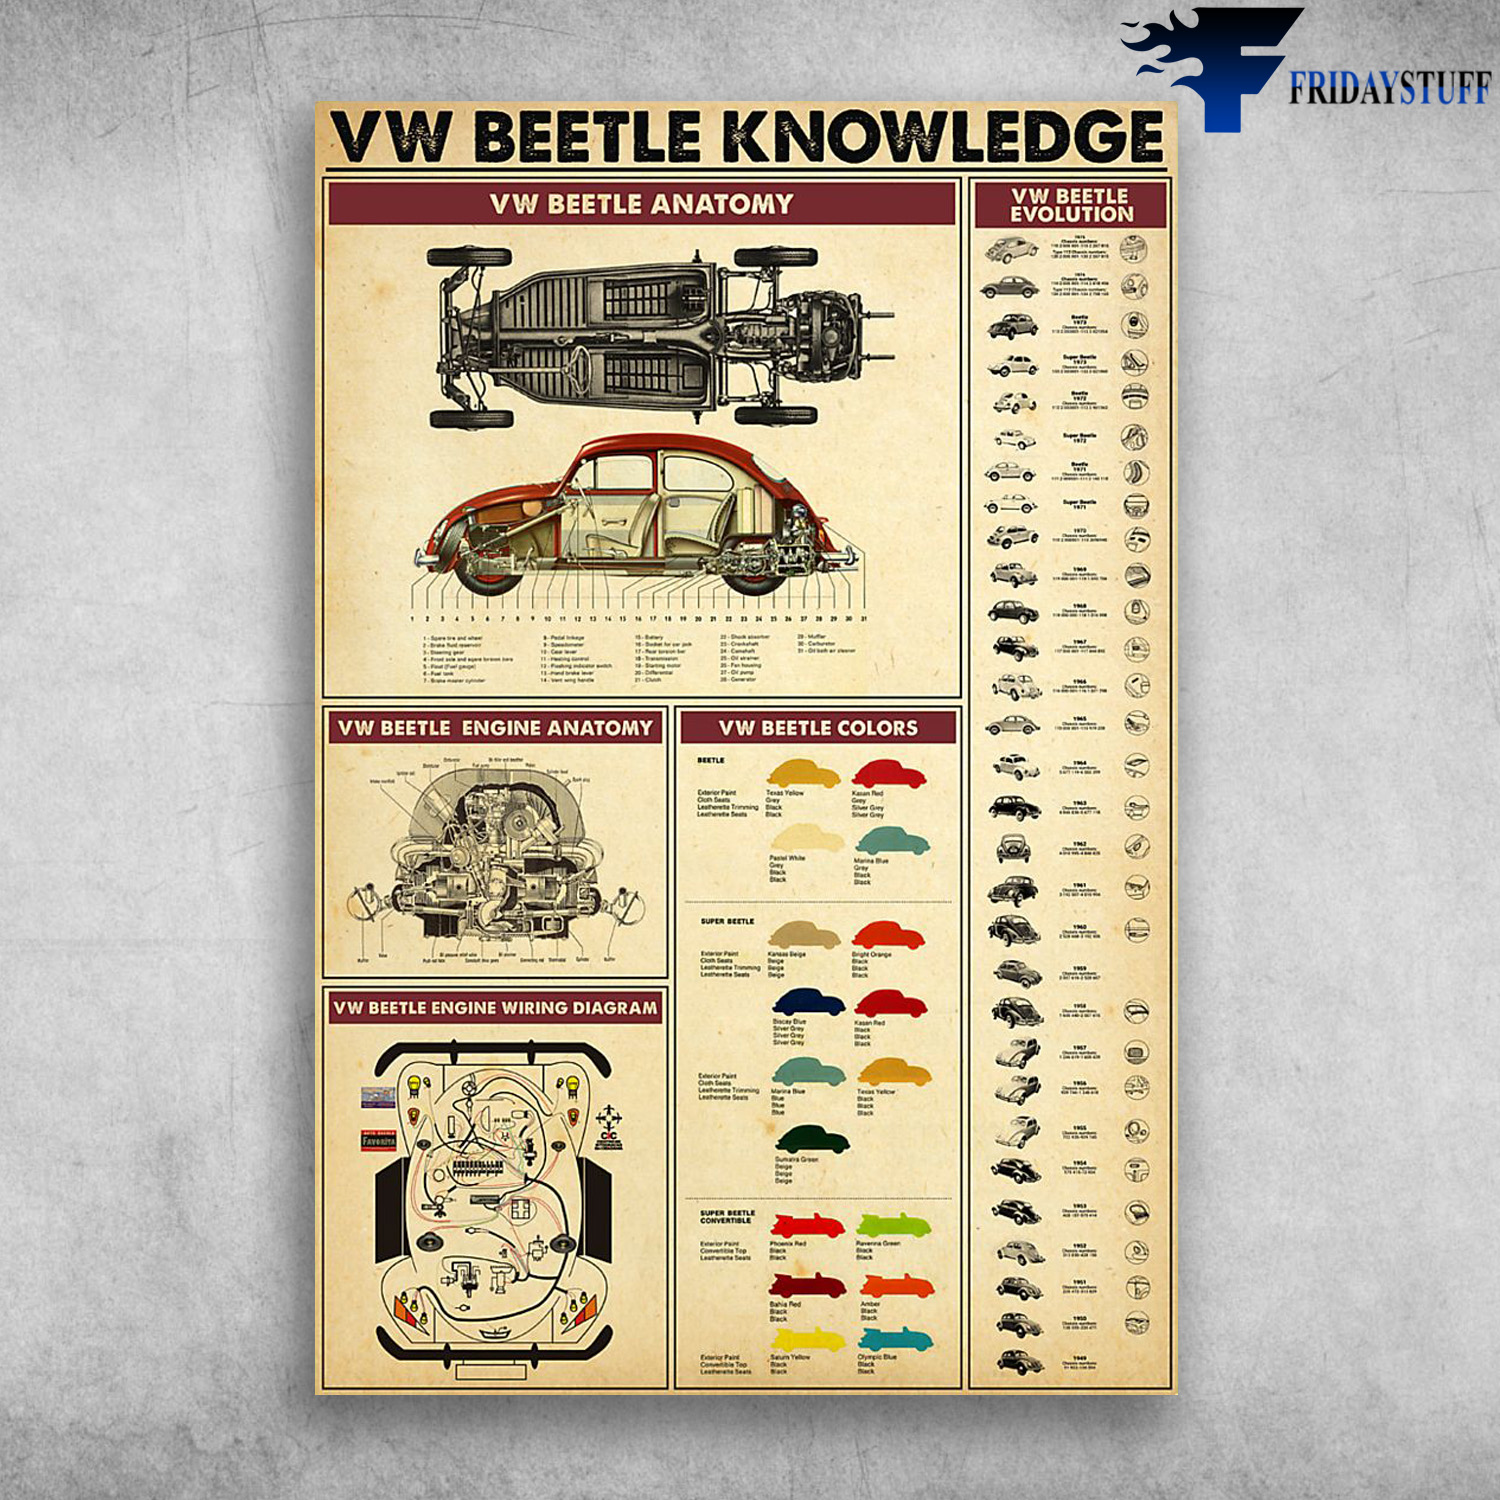 Vw Beetle Knowledge Vw Beetle Anatomy Vw Beetle Evolution